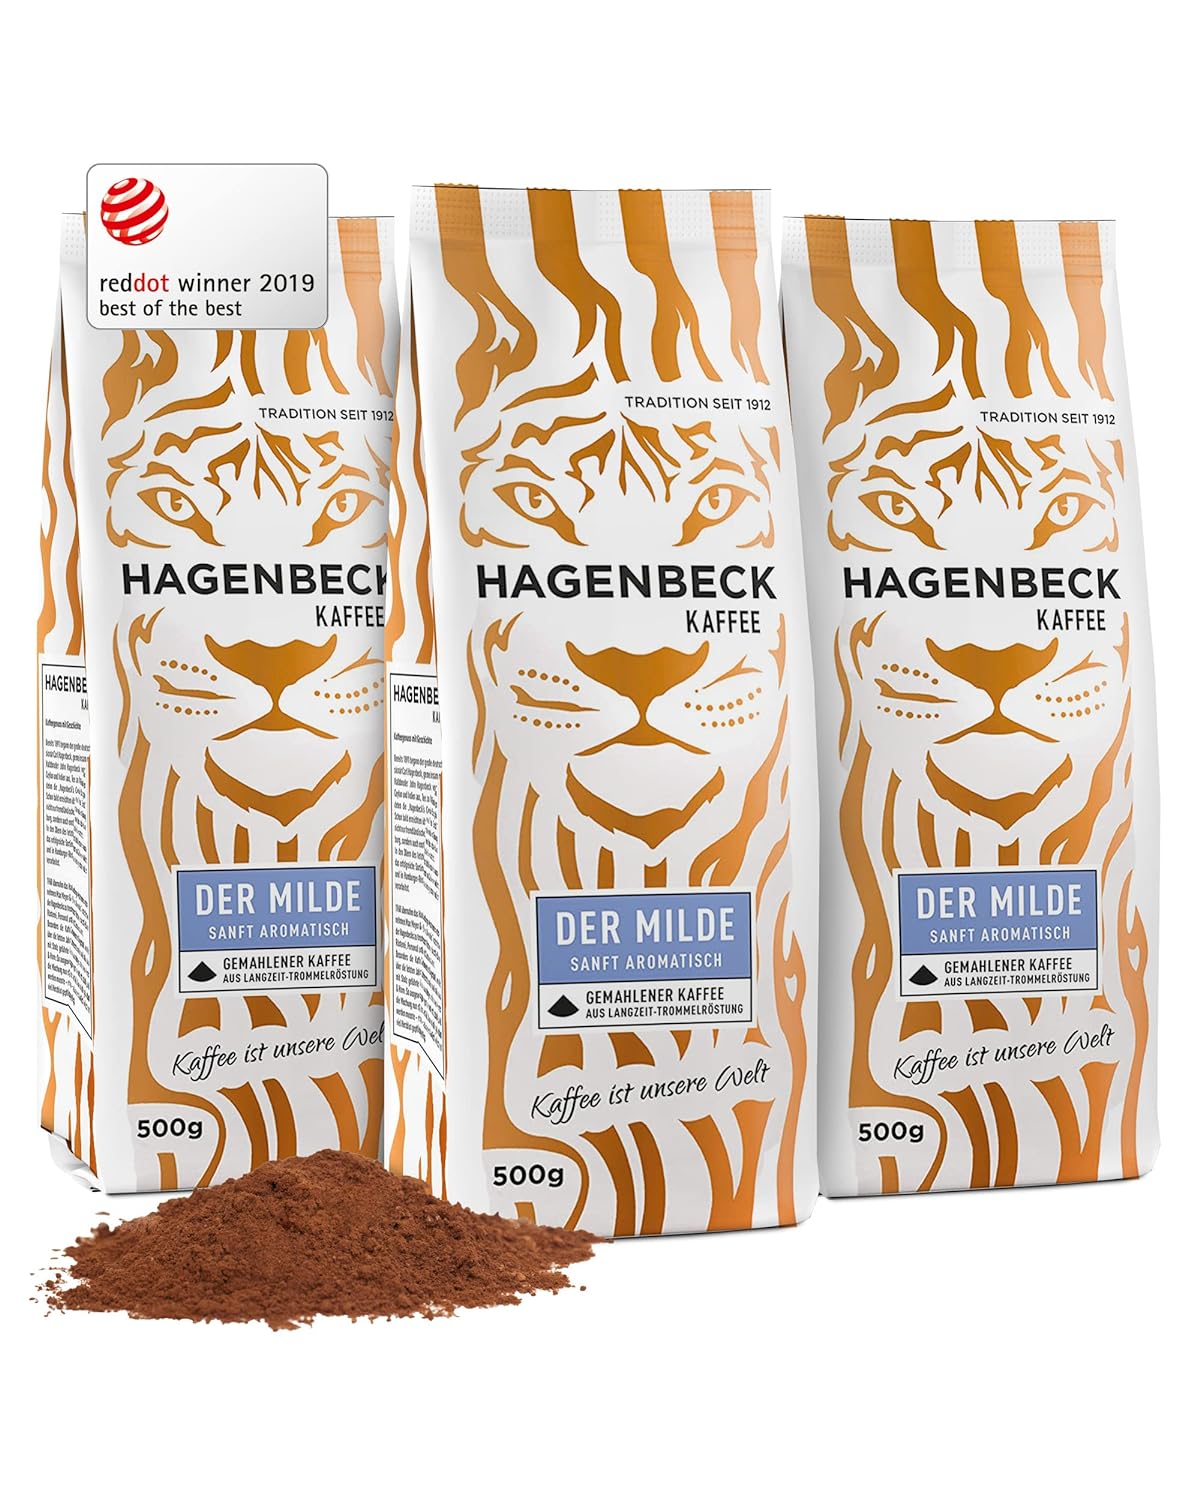 Hagenbeck Coffee Gift Set | Aromatic Filter Coffee Ground | 250g each Cafehaus, Hanseat, Der Milde & Bio-Reinkultur with Tigerbox | Coffee specialities tasting set as a gift idea
